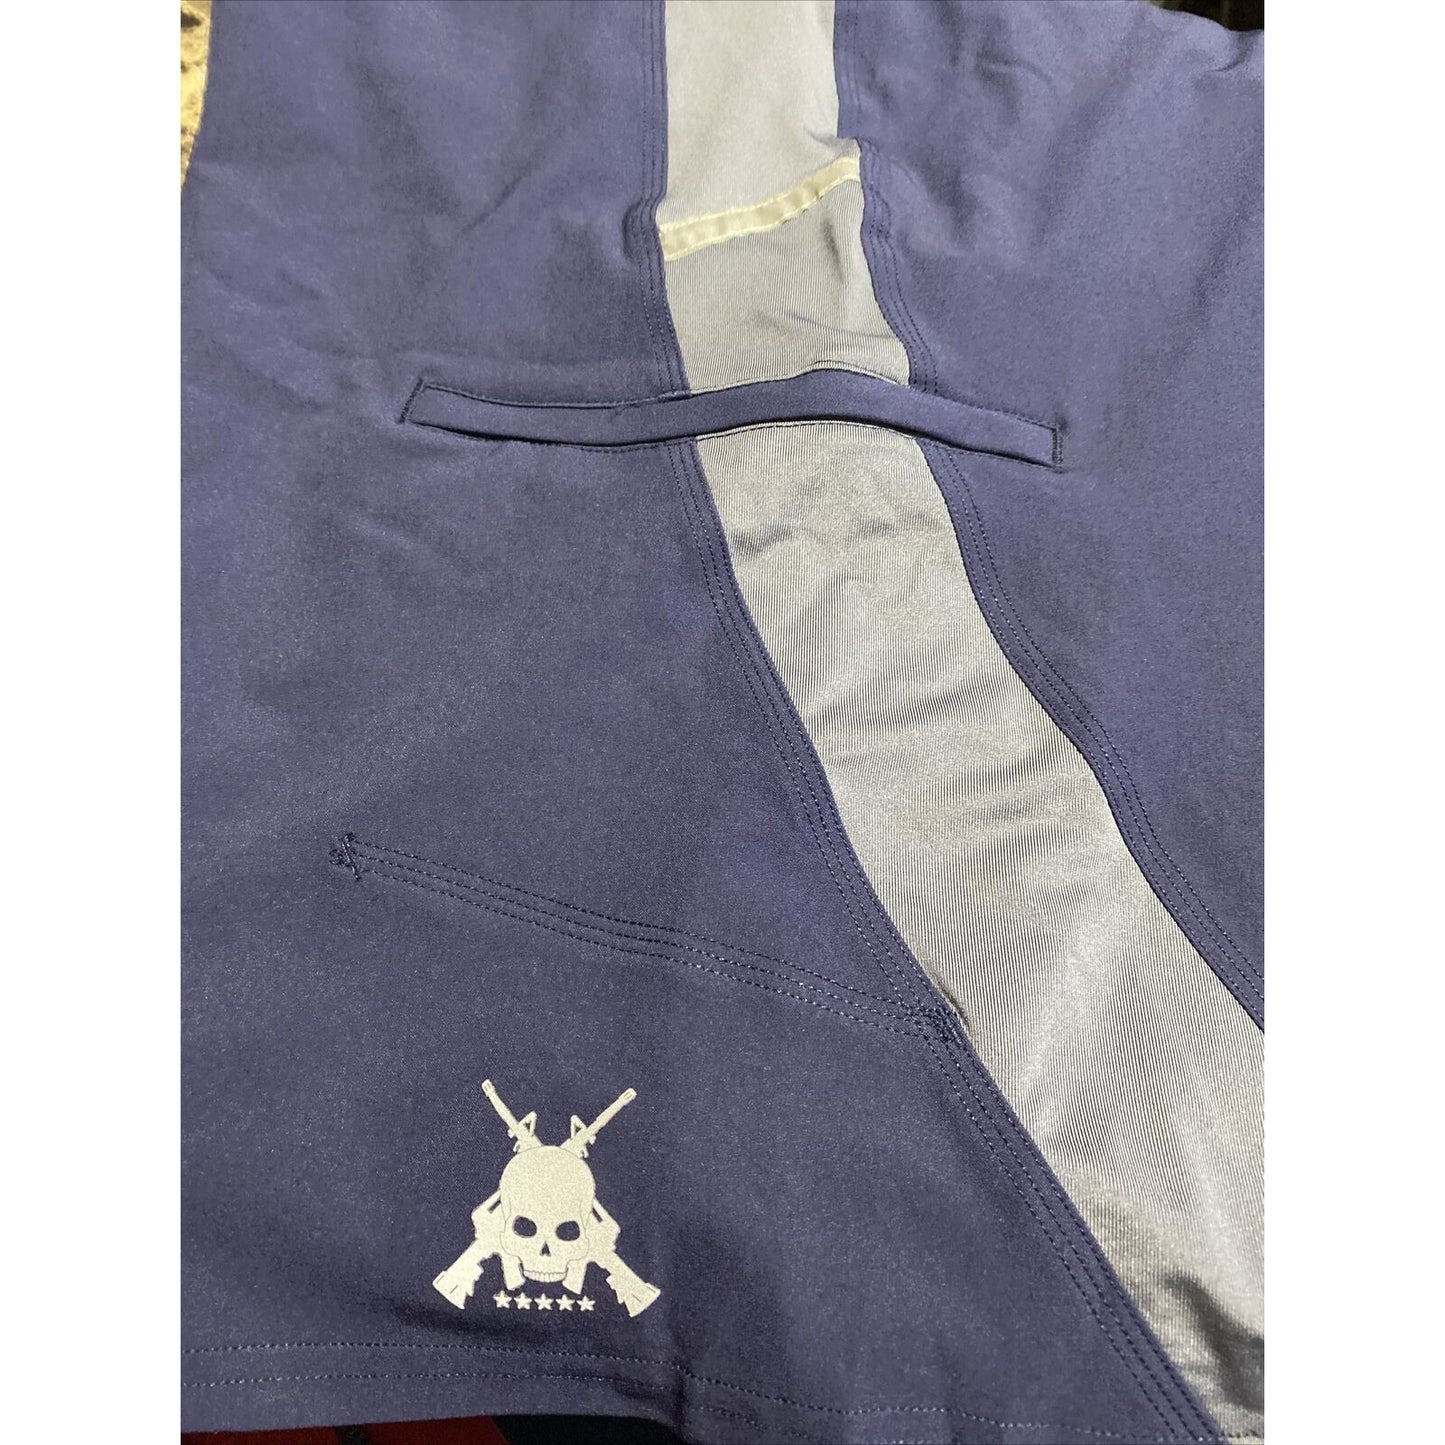 Soffe Extreme Training XT46 Men’s 34 (M) Navy Blue Gray Utility Board Shorts NWT